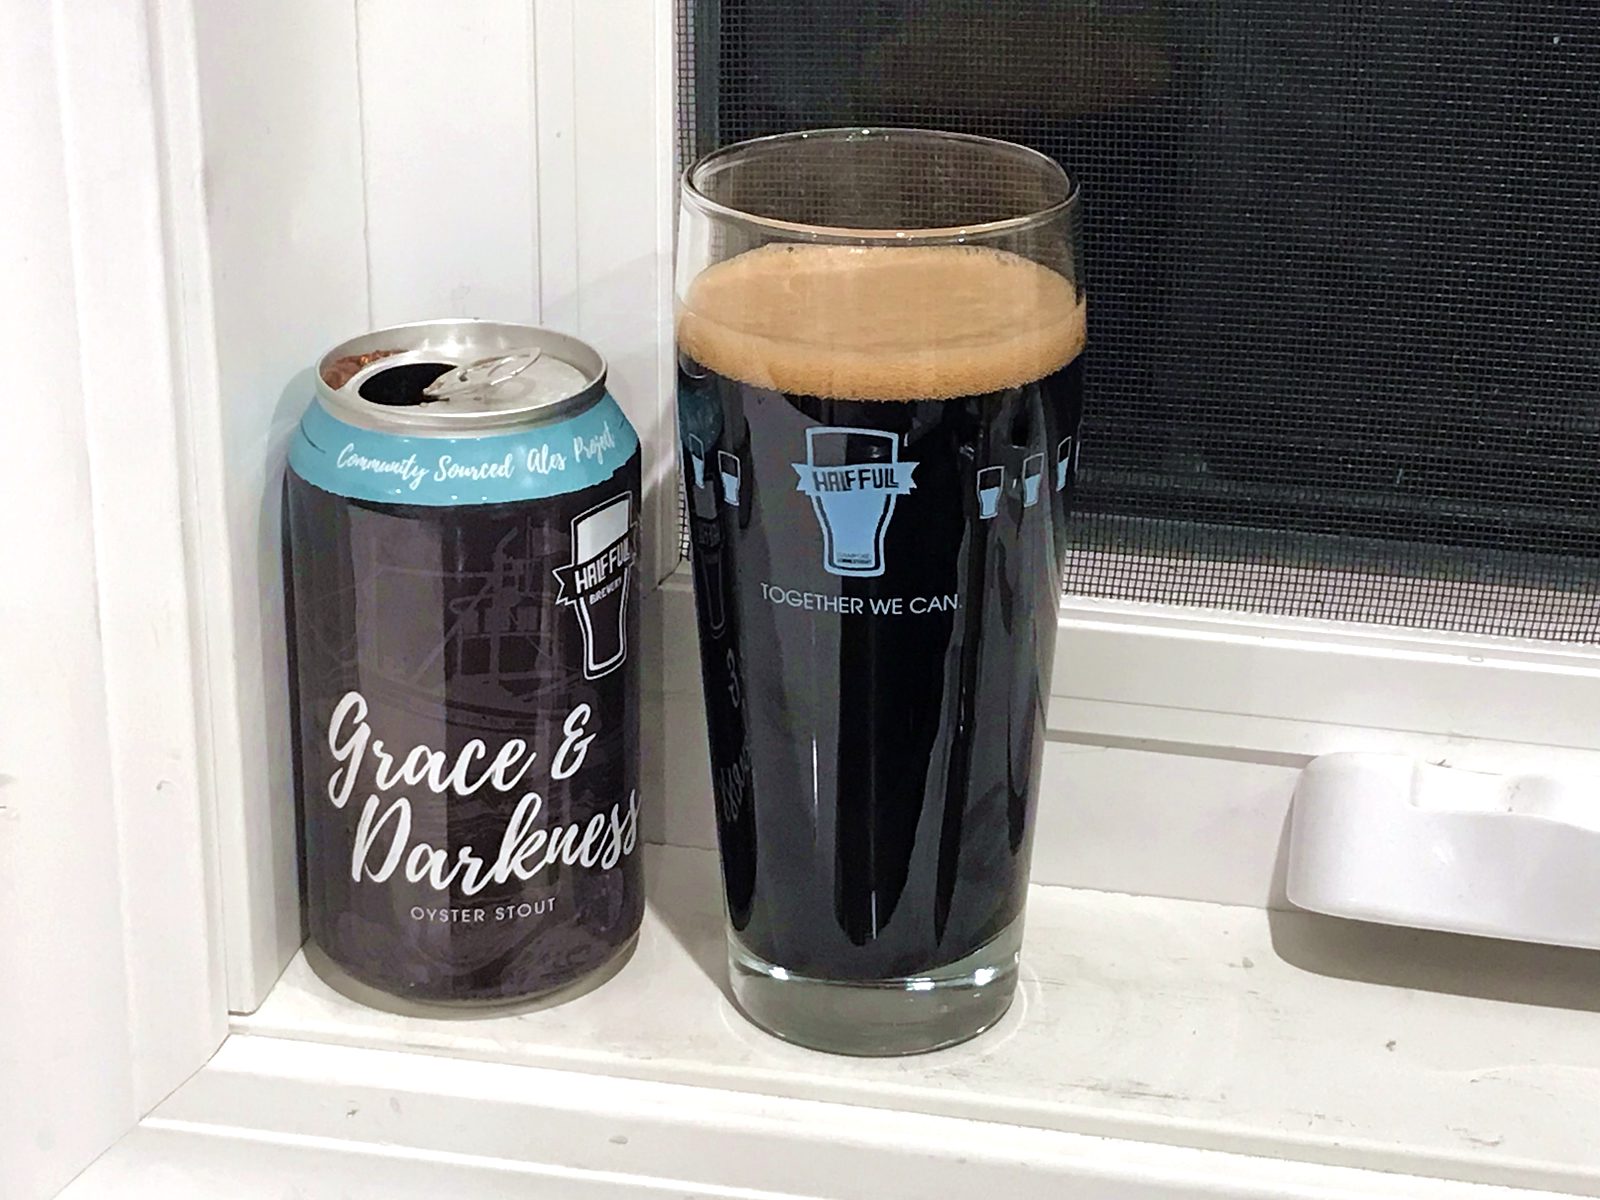 Half Full Brewery: Grace & Darkness